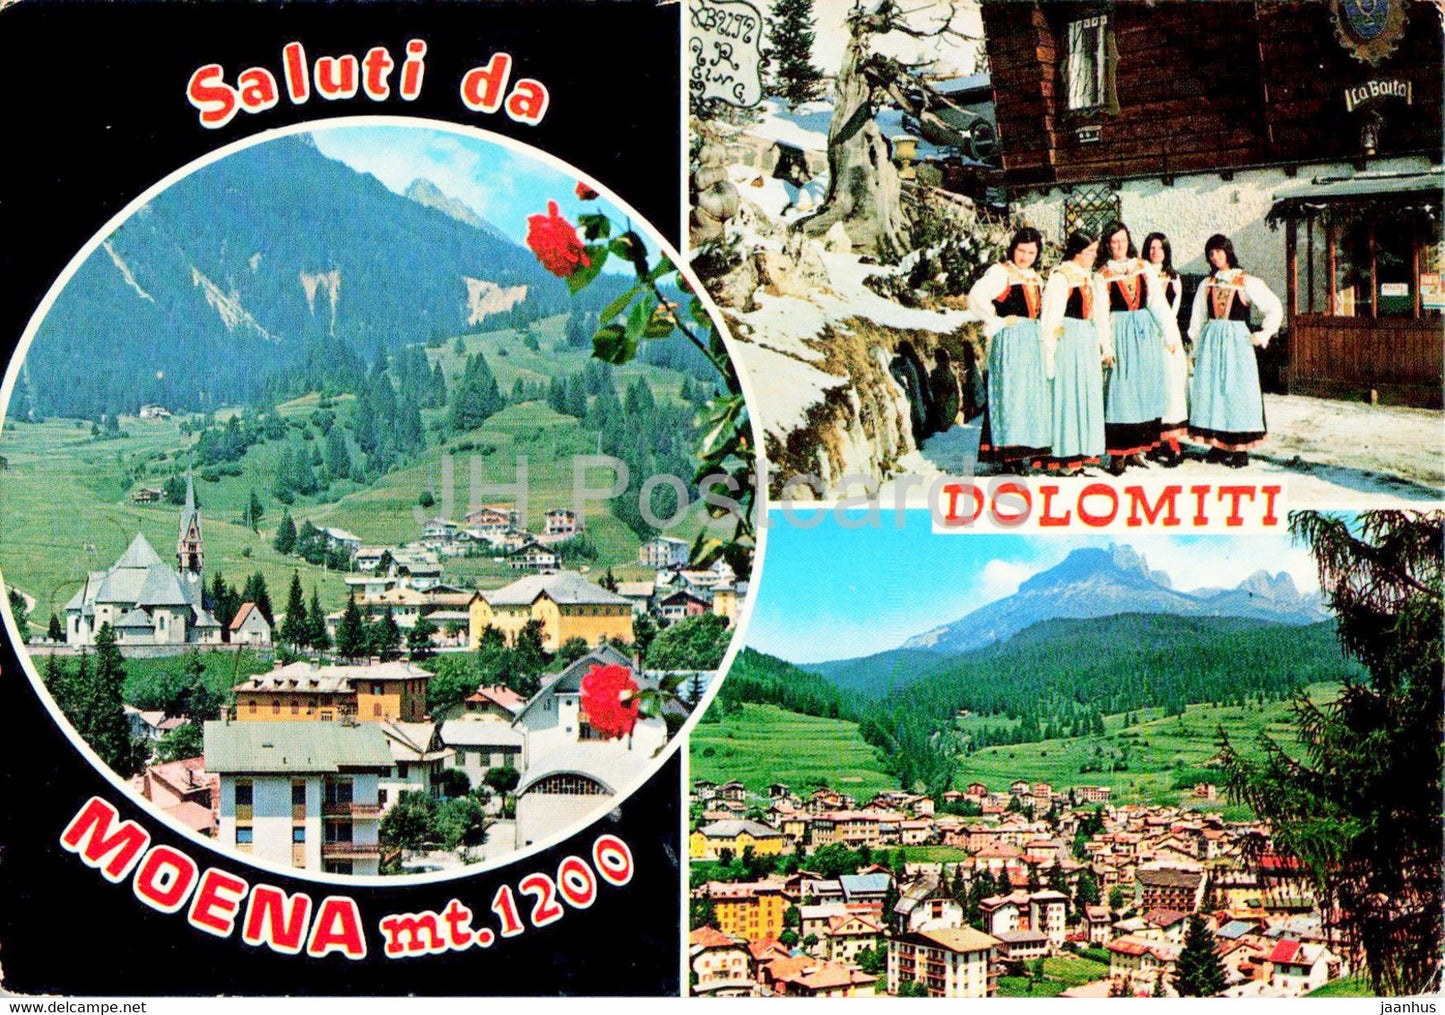 Saluti da Moena - Dolomiti - folk costumes - 1977 - Italy - used - JH Postcards